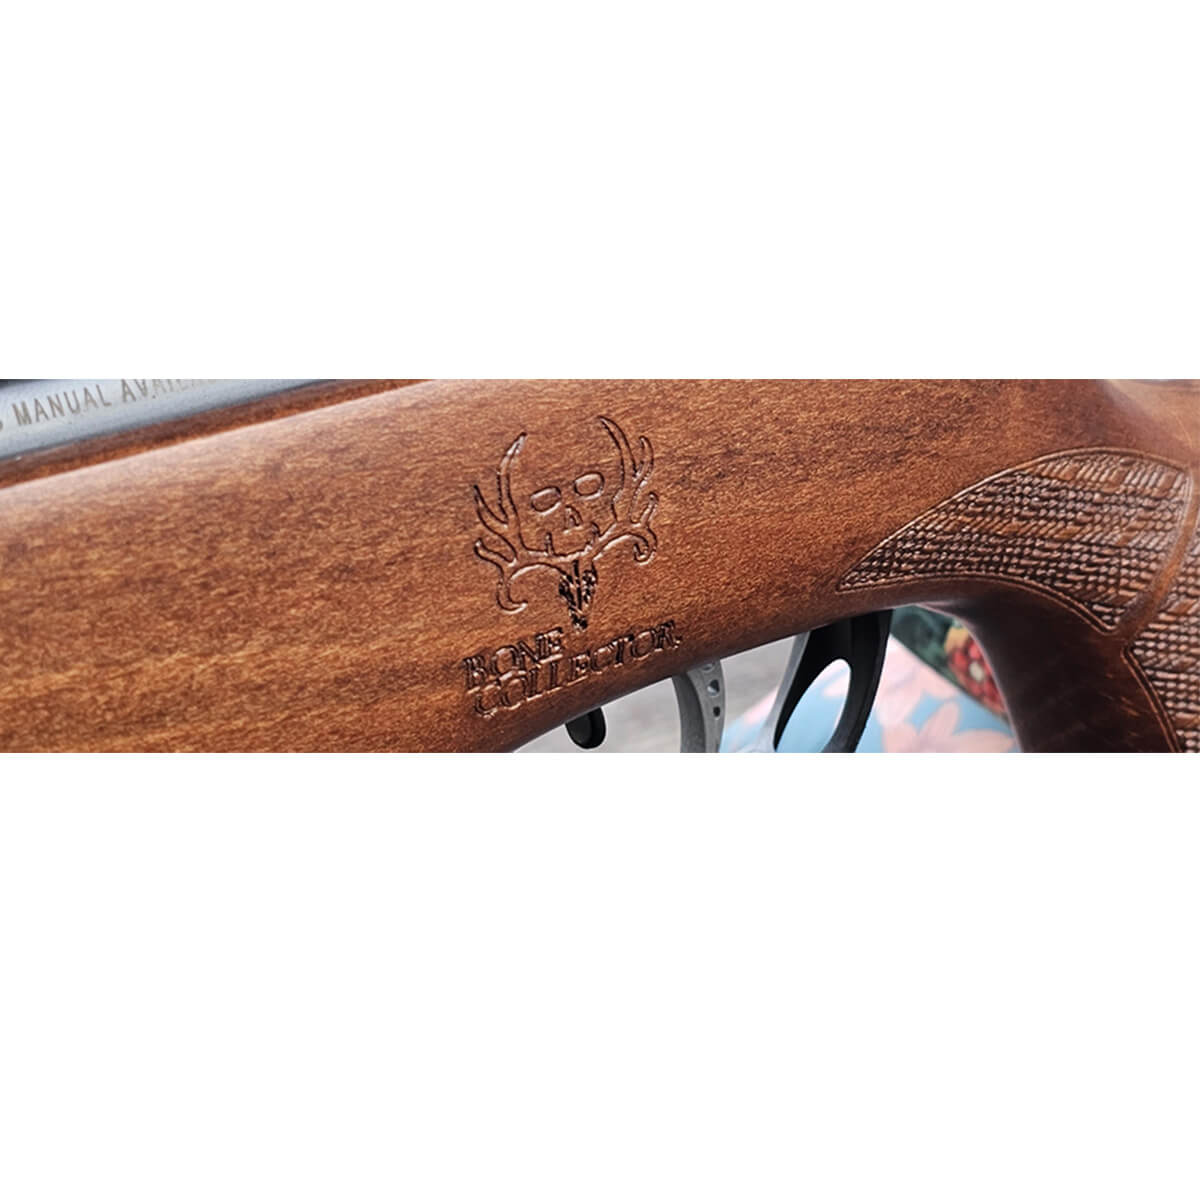 Swarm Bone Collector Wood Stock Pellet Rifle 10X GEN3i